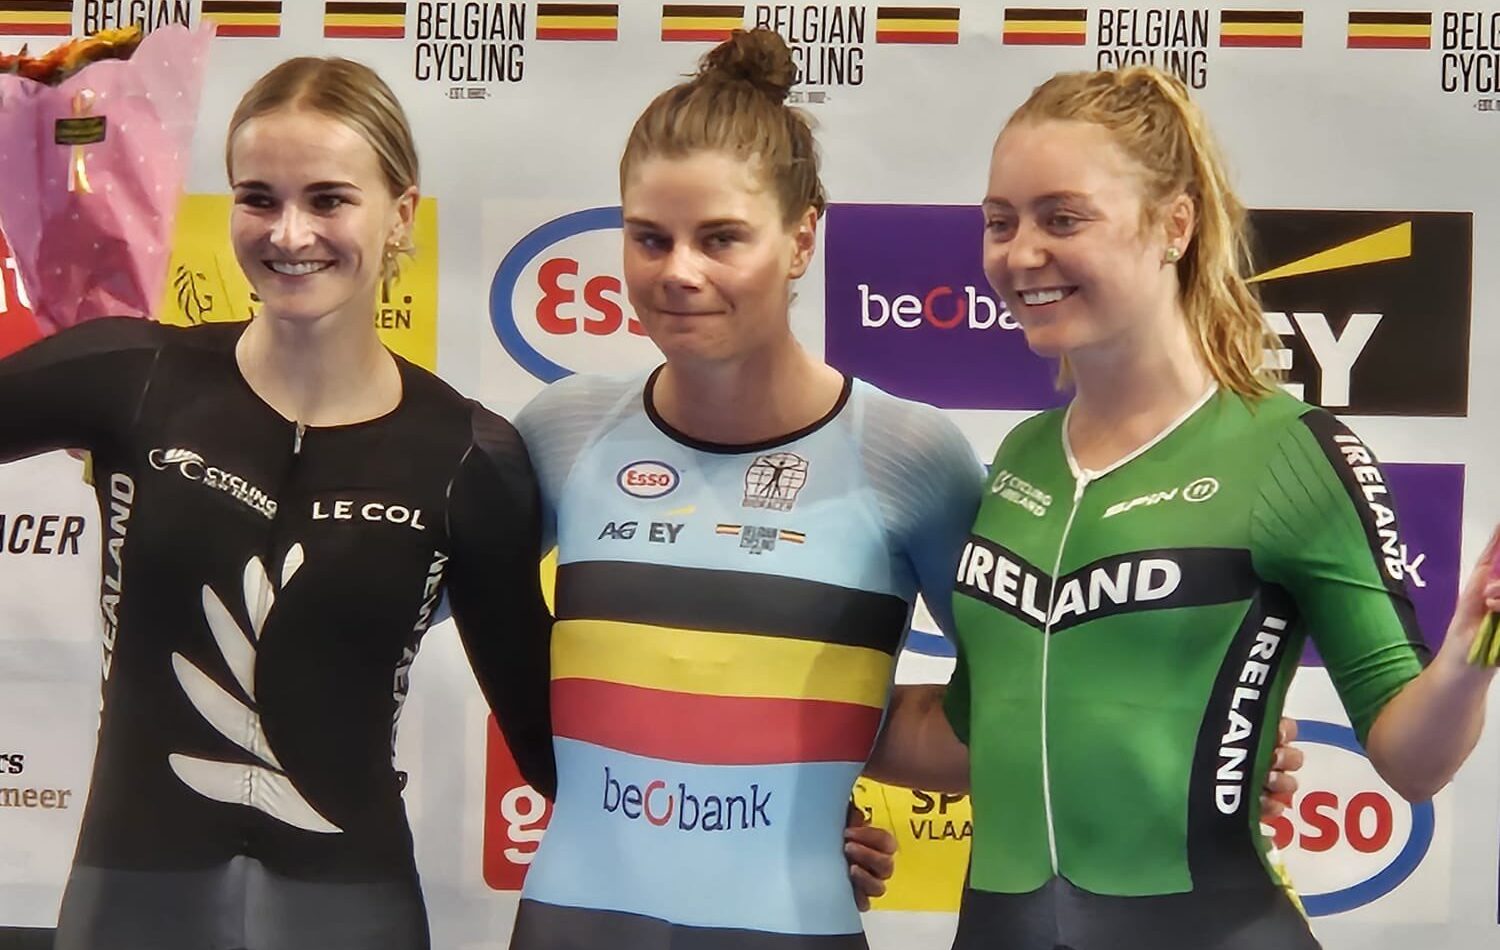 Irish riders score podium results at Ghent International Meeting